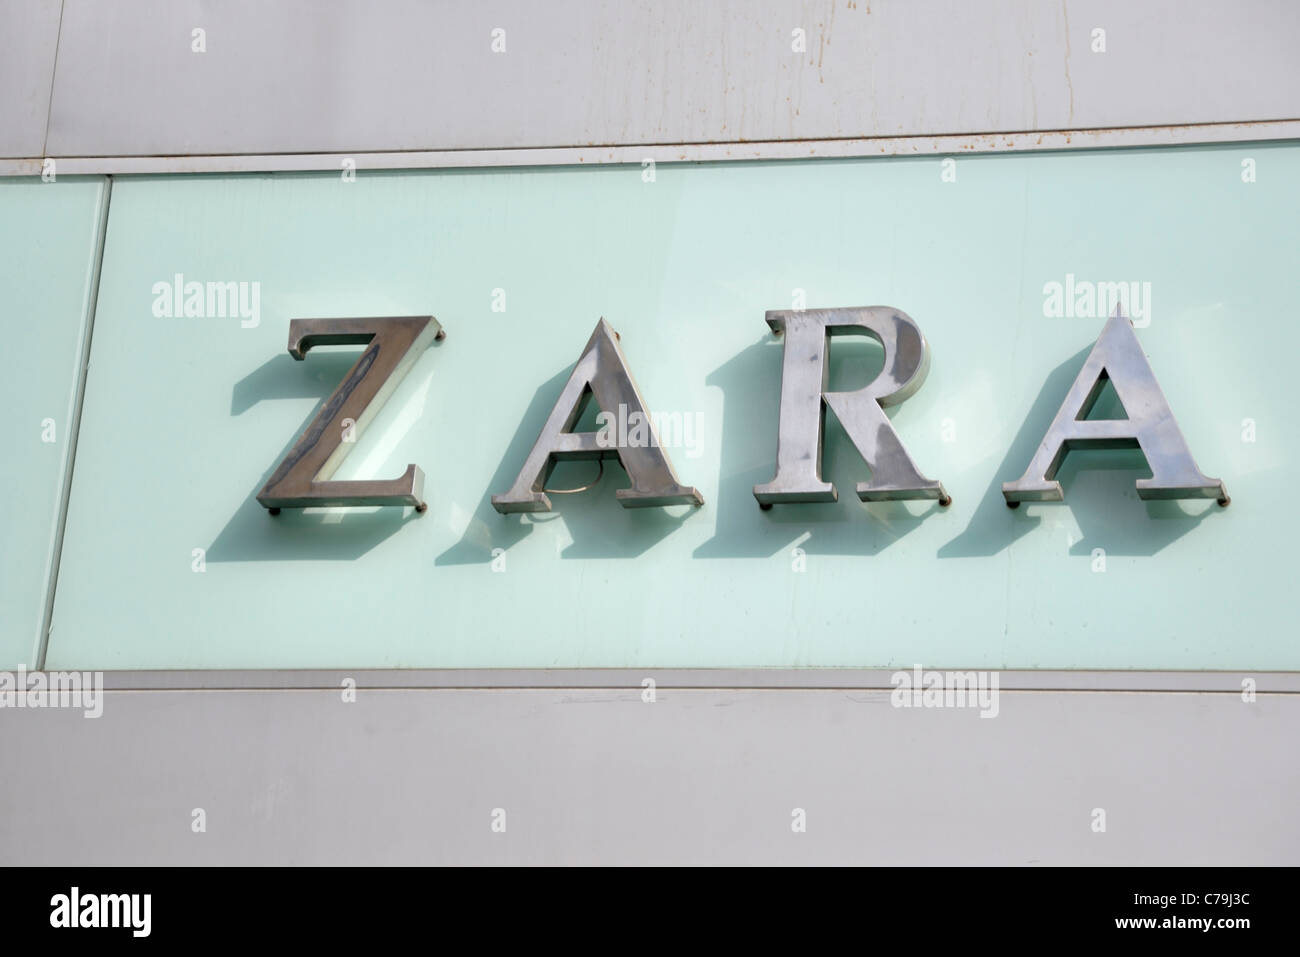 Zara sign, Vienna, Austria, Europe Stock Photo